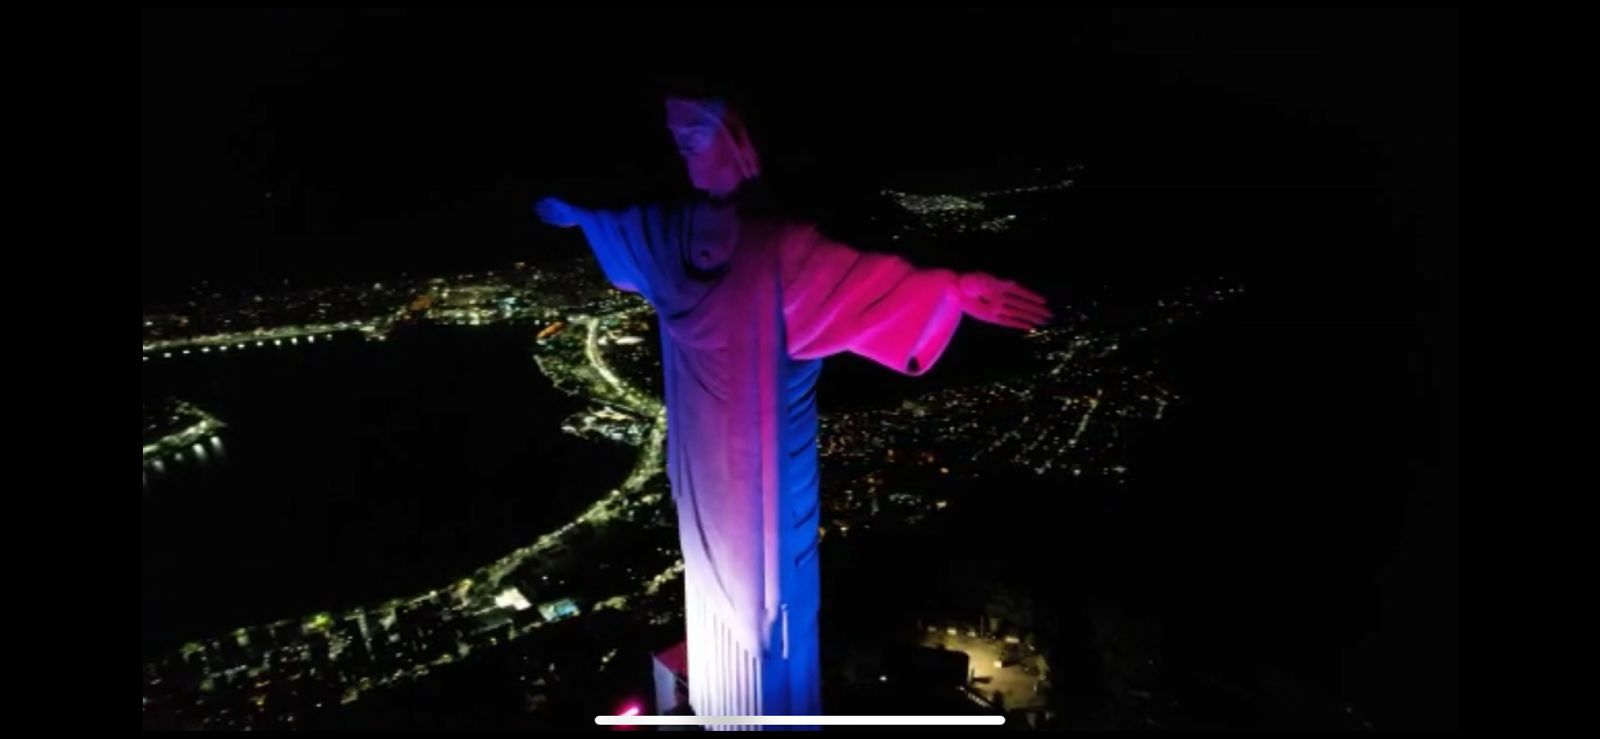 Rio de Janeiro: “Consulado viste de dominicano al Cristo del Corcovado”